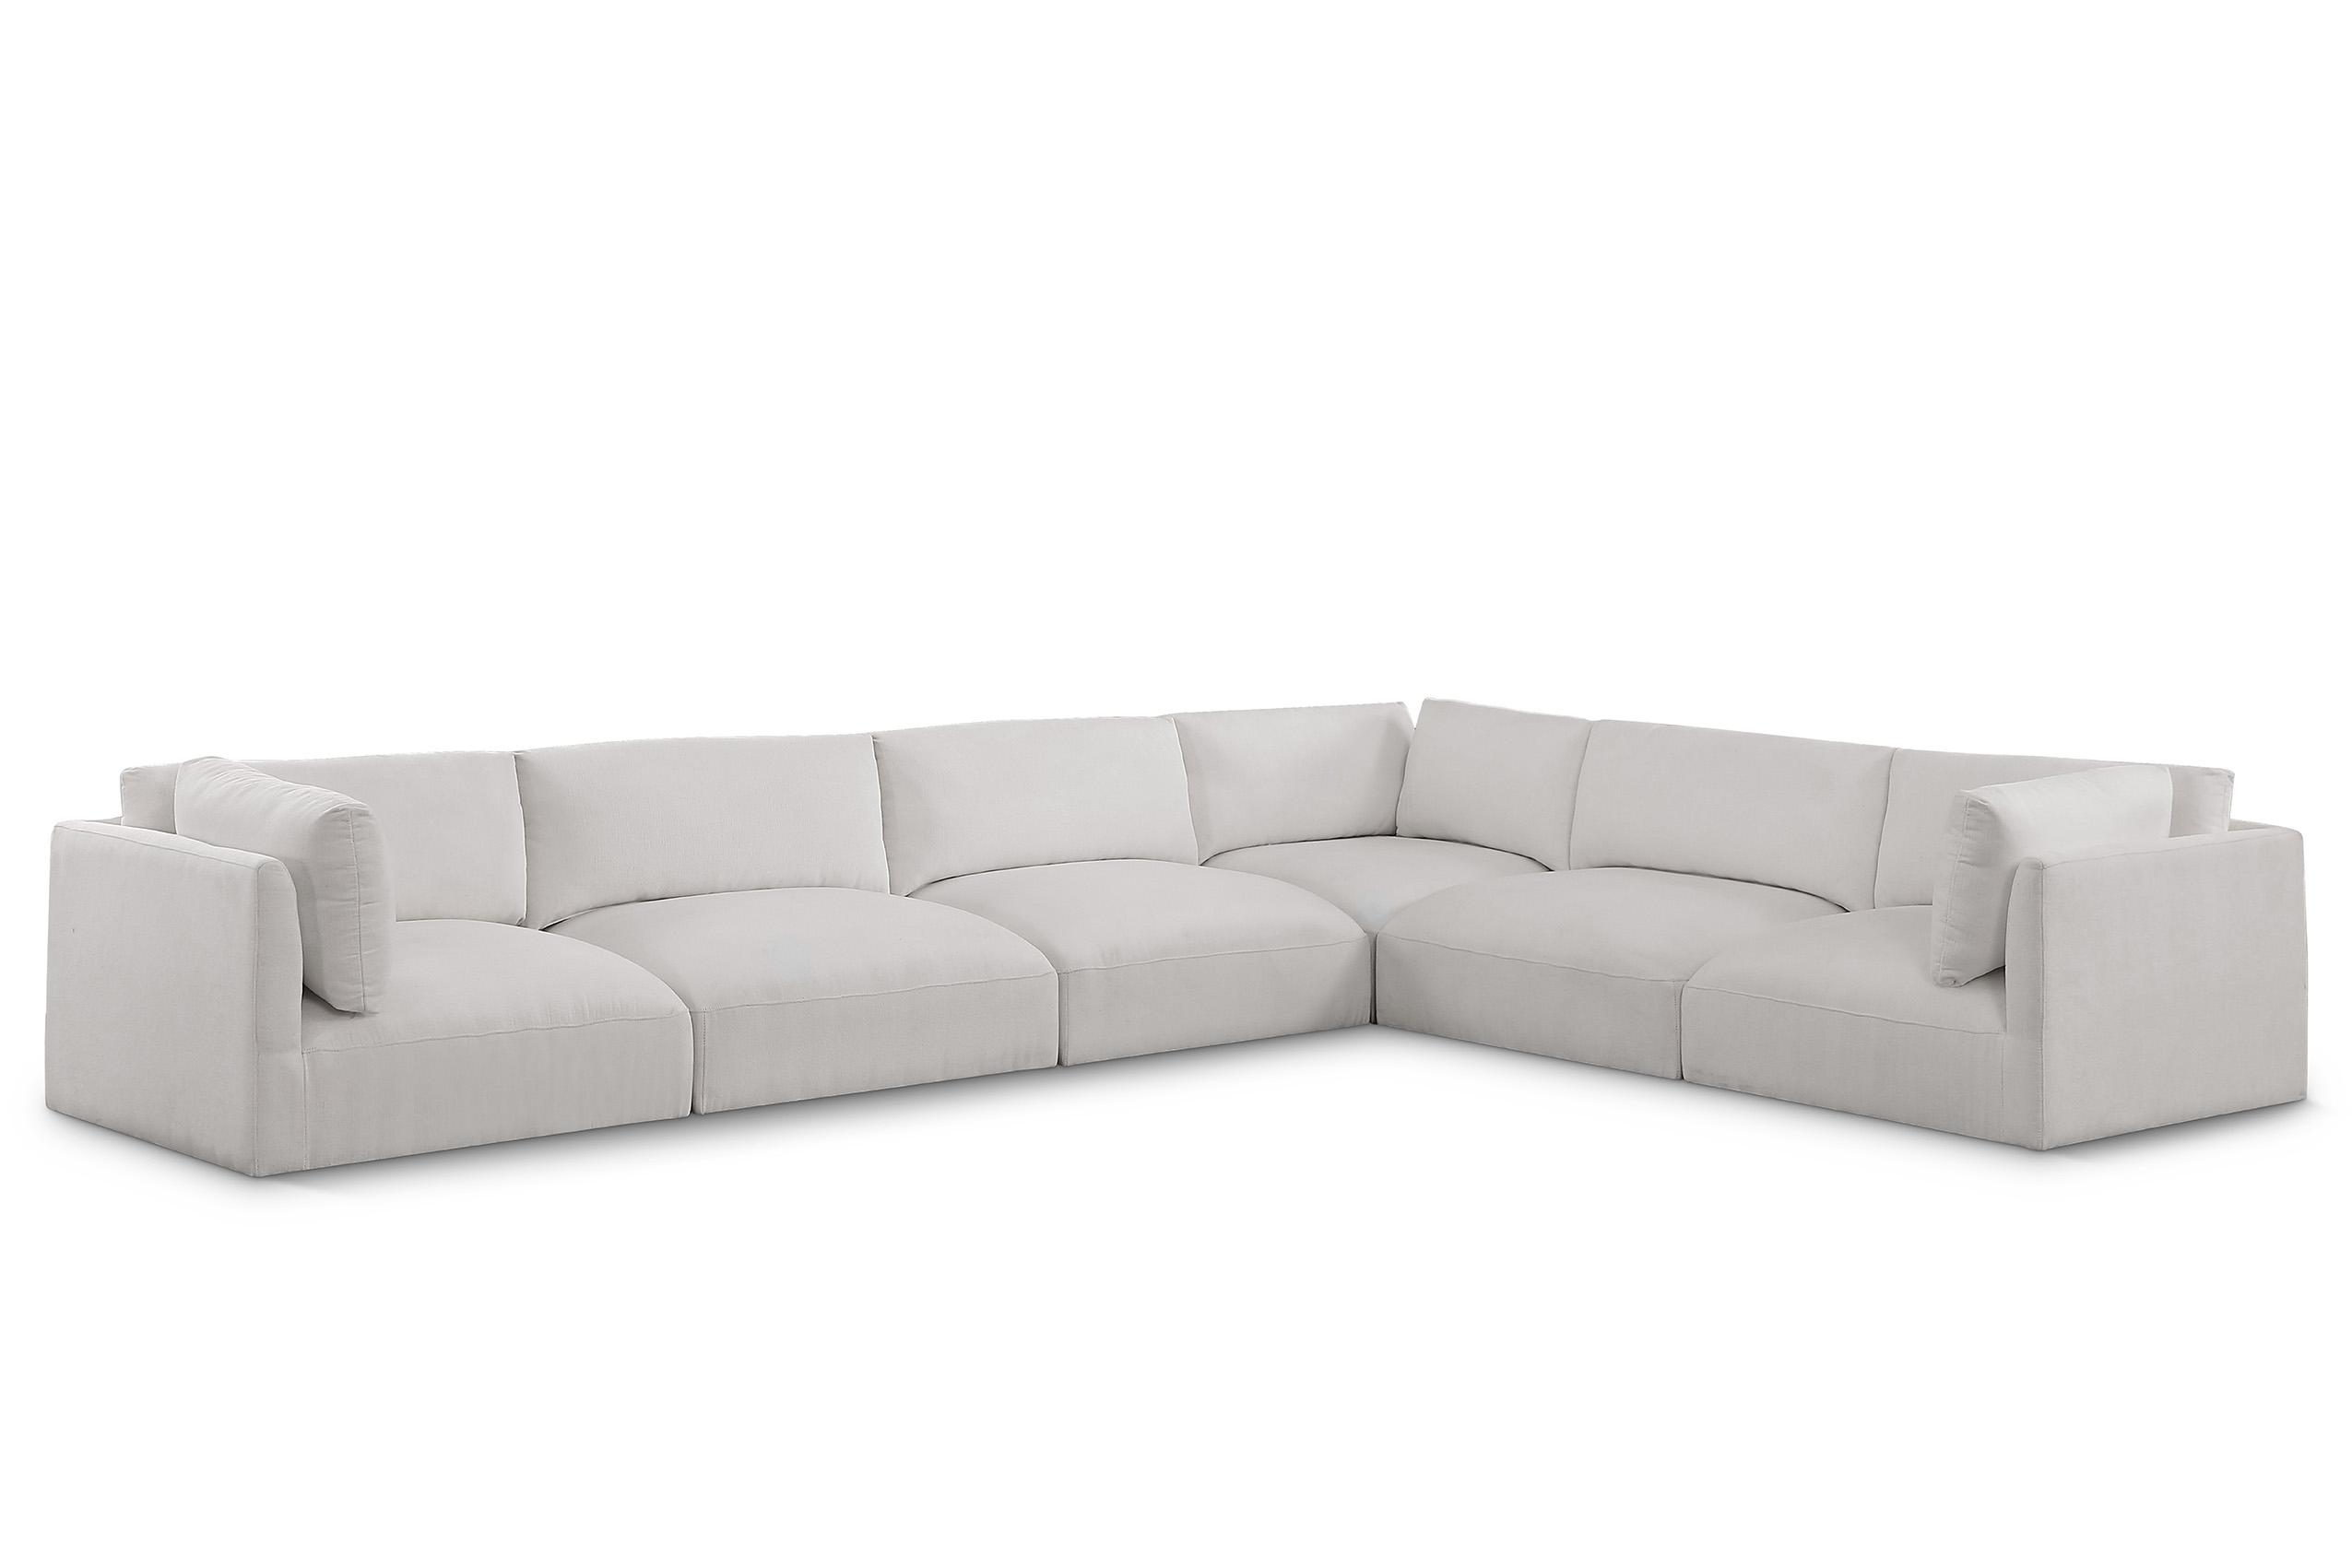 Contemporary, Modern Modular Sectional Sofa EASE 696Cream-Sec6D 696Cream-Sec6D in Cream Fabric